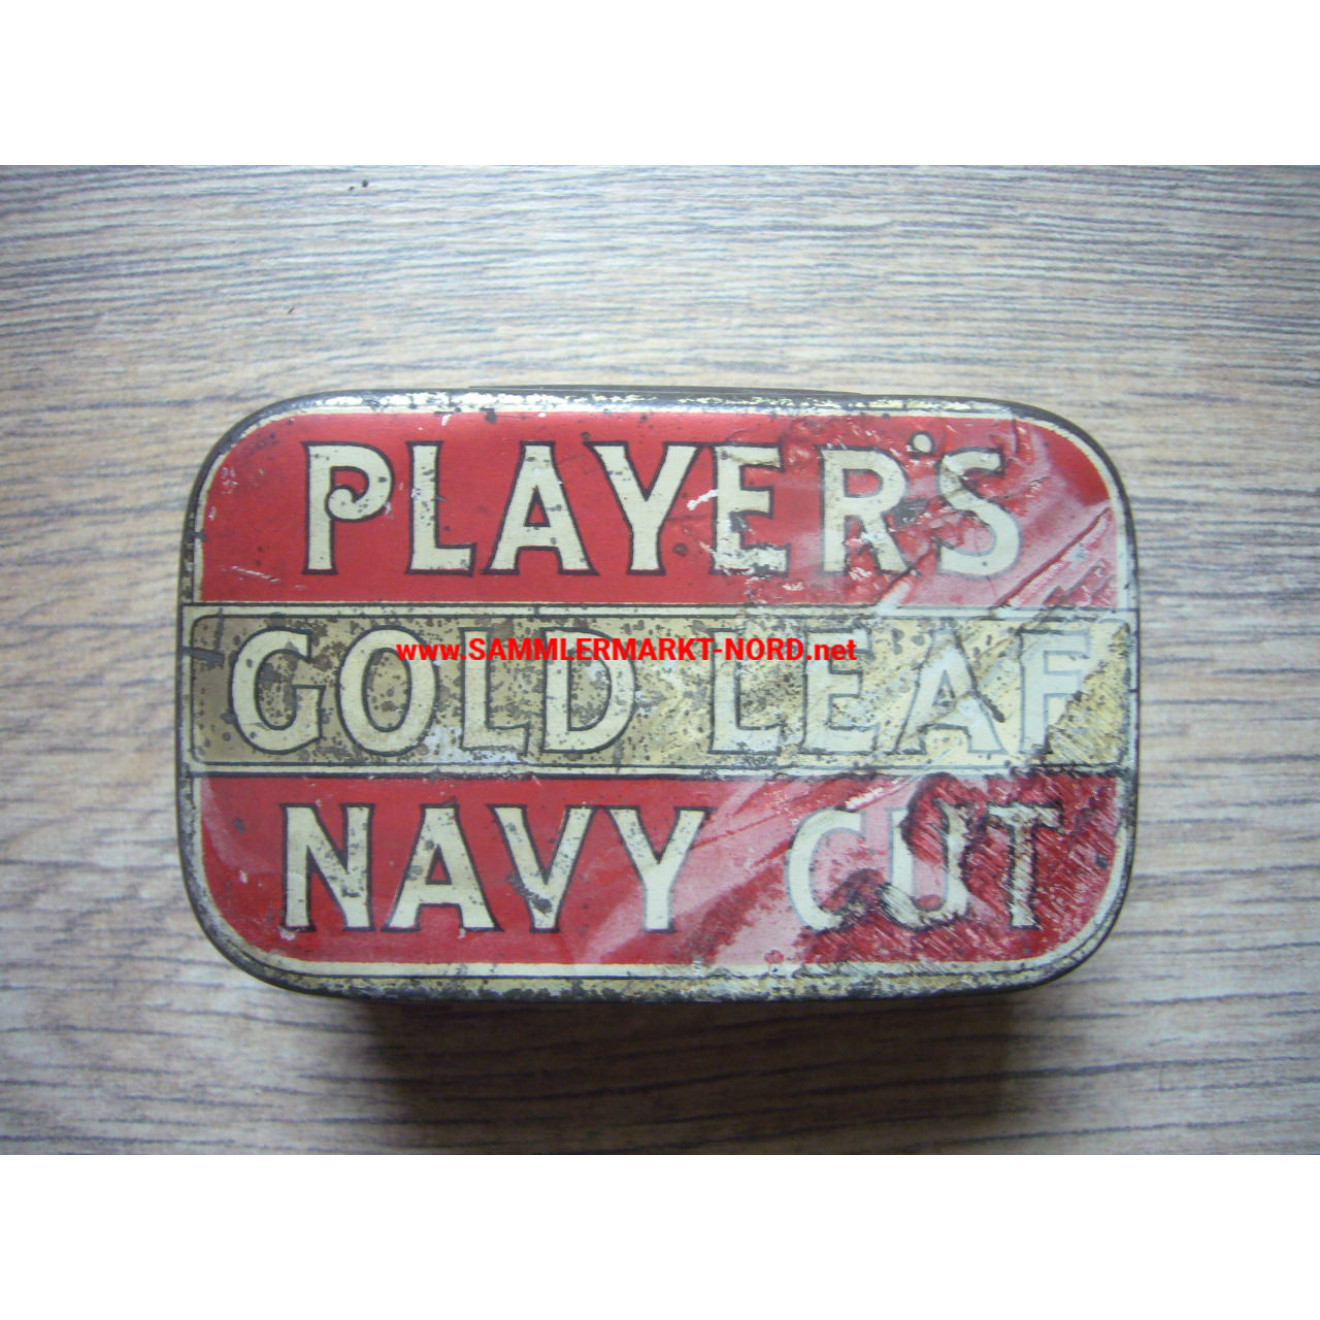 Player's Gold Leaf Navy Cut - Tobacco Box - Sutler